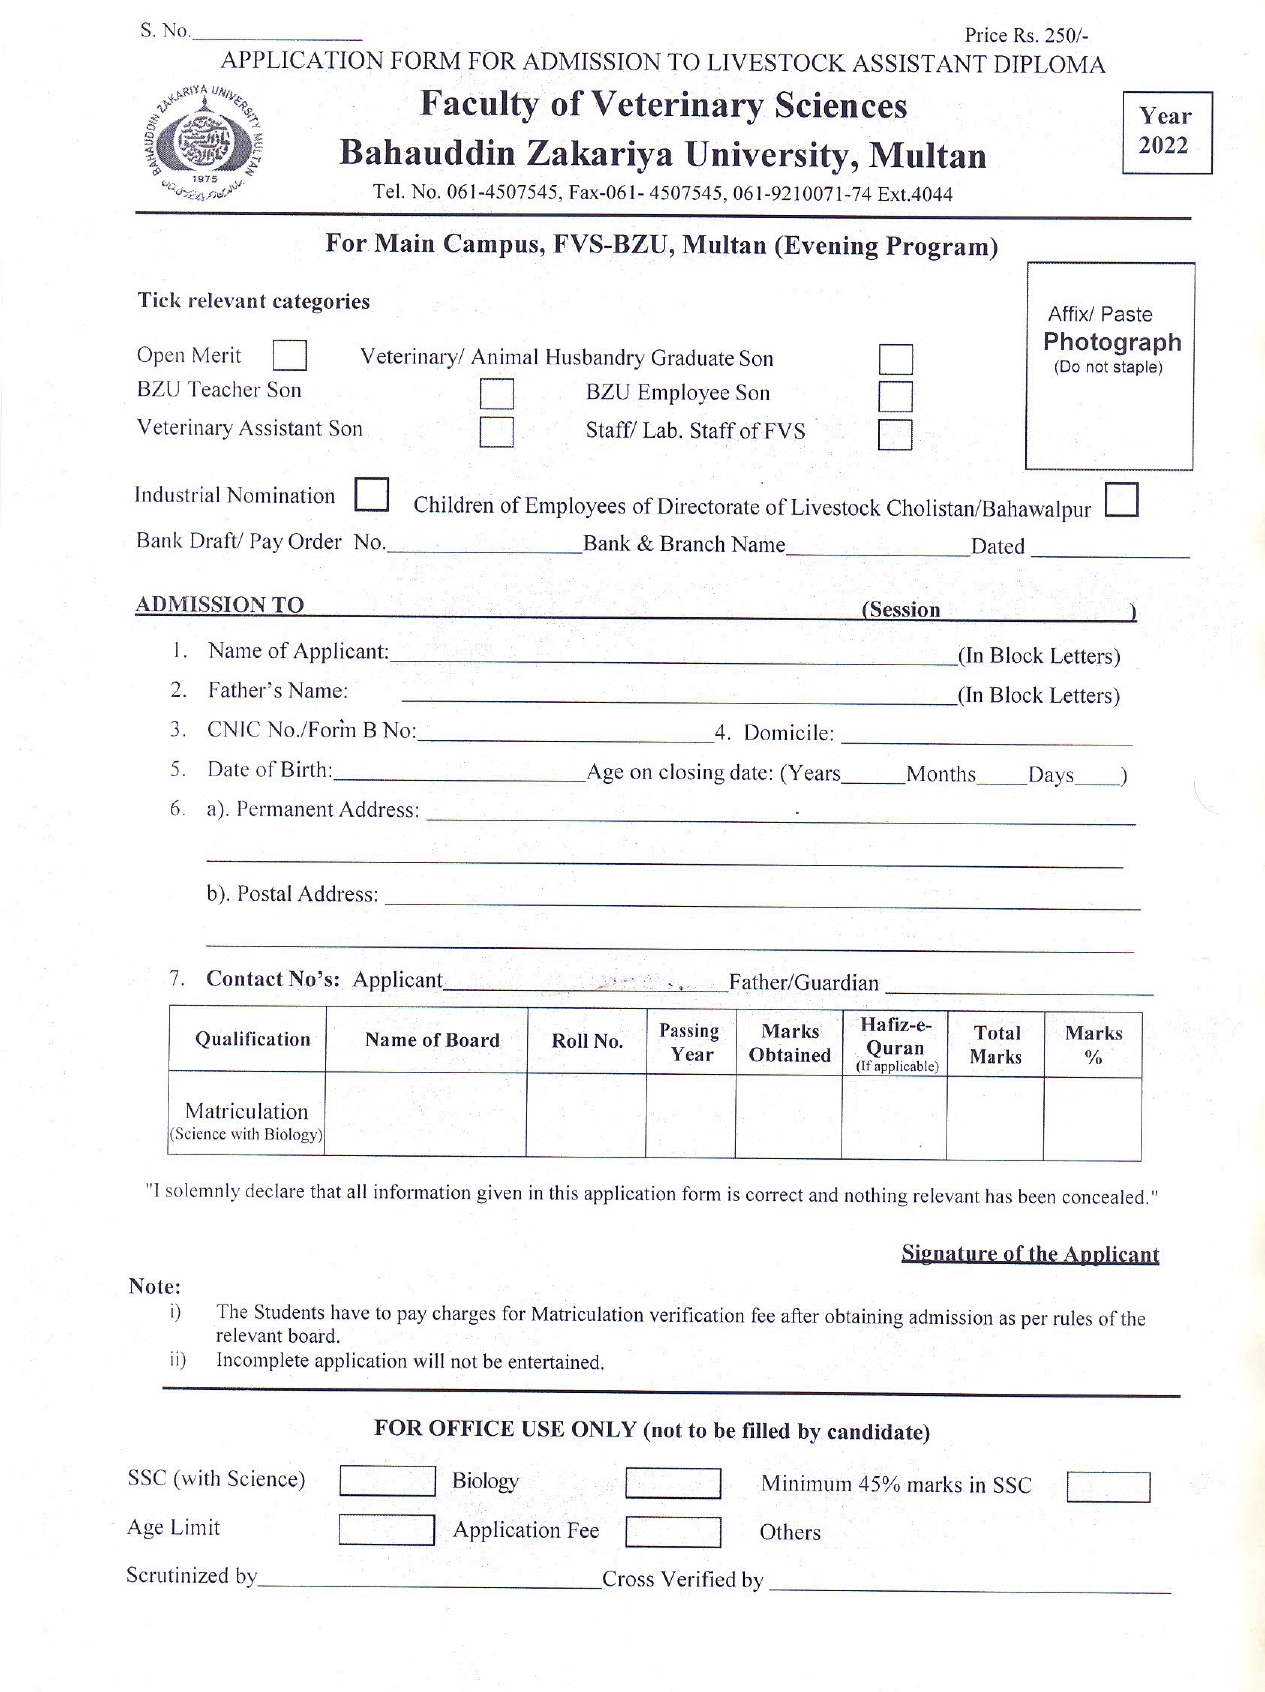 LAD admission form for BZU